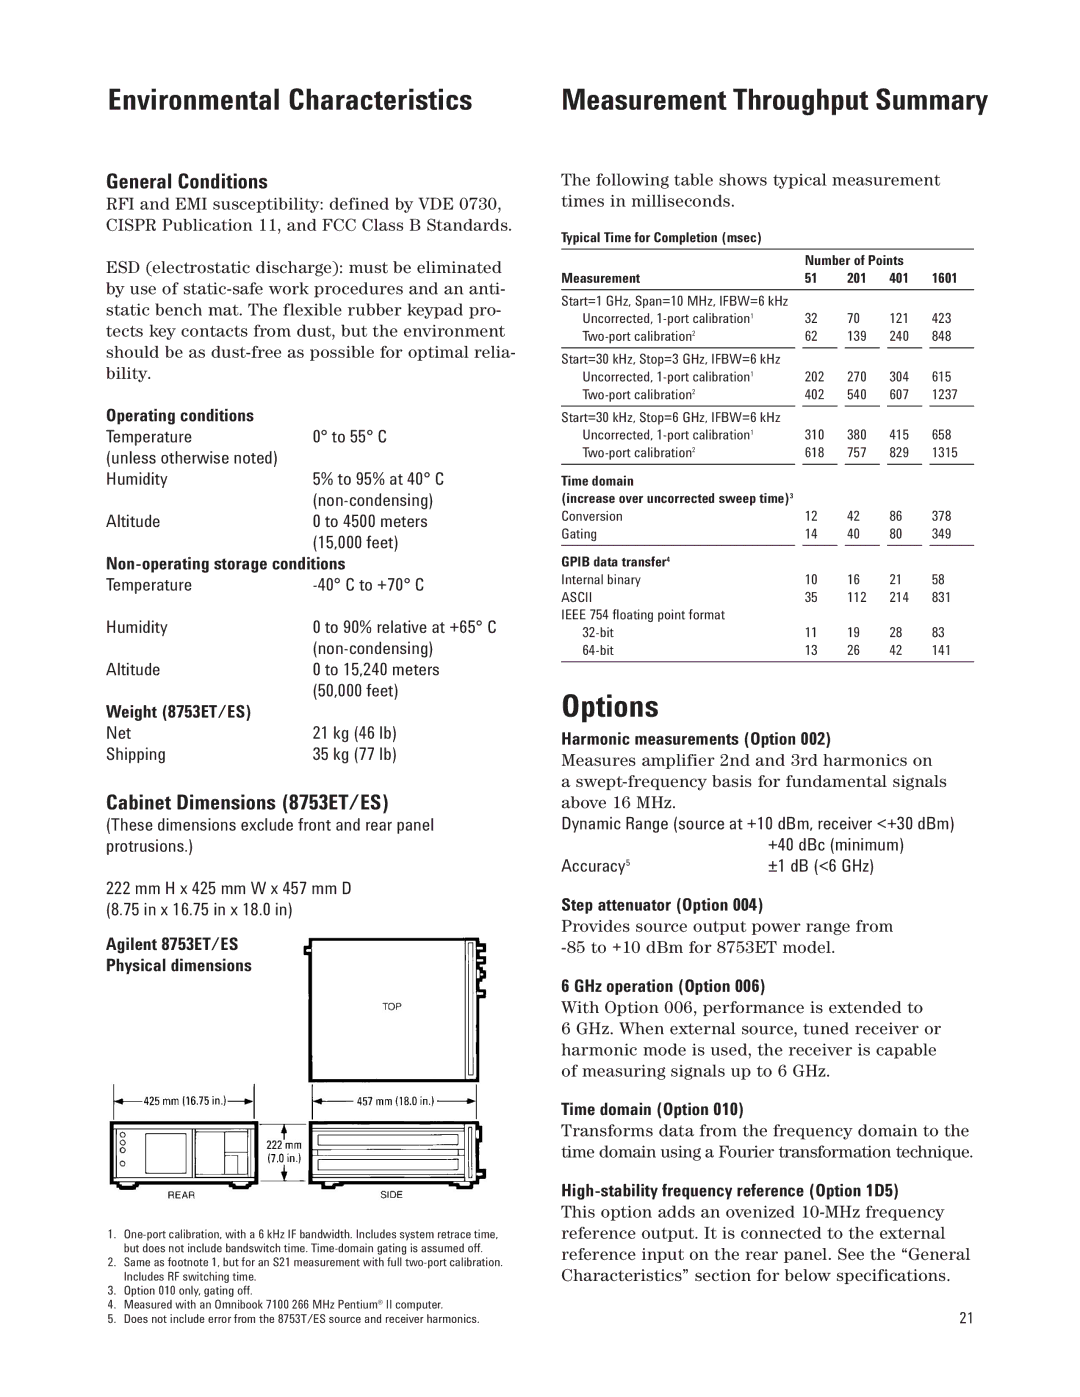 Agilent Technologies 8753ES manual Options, General Conditions, Cabinet Dimensions 8753ET/ES 